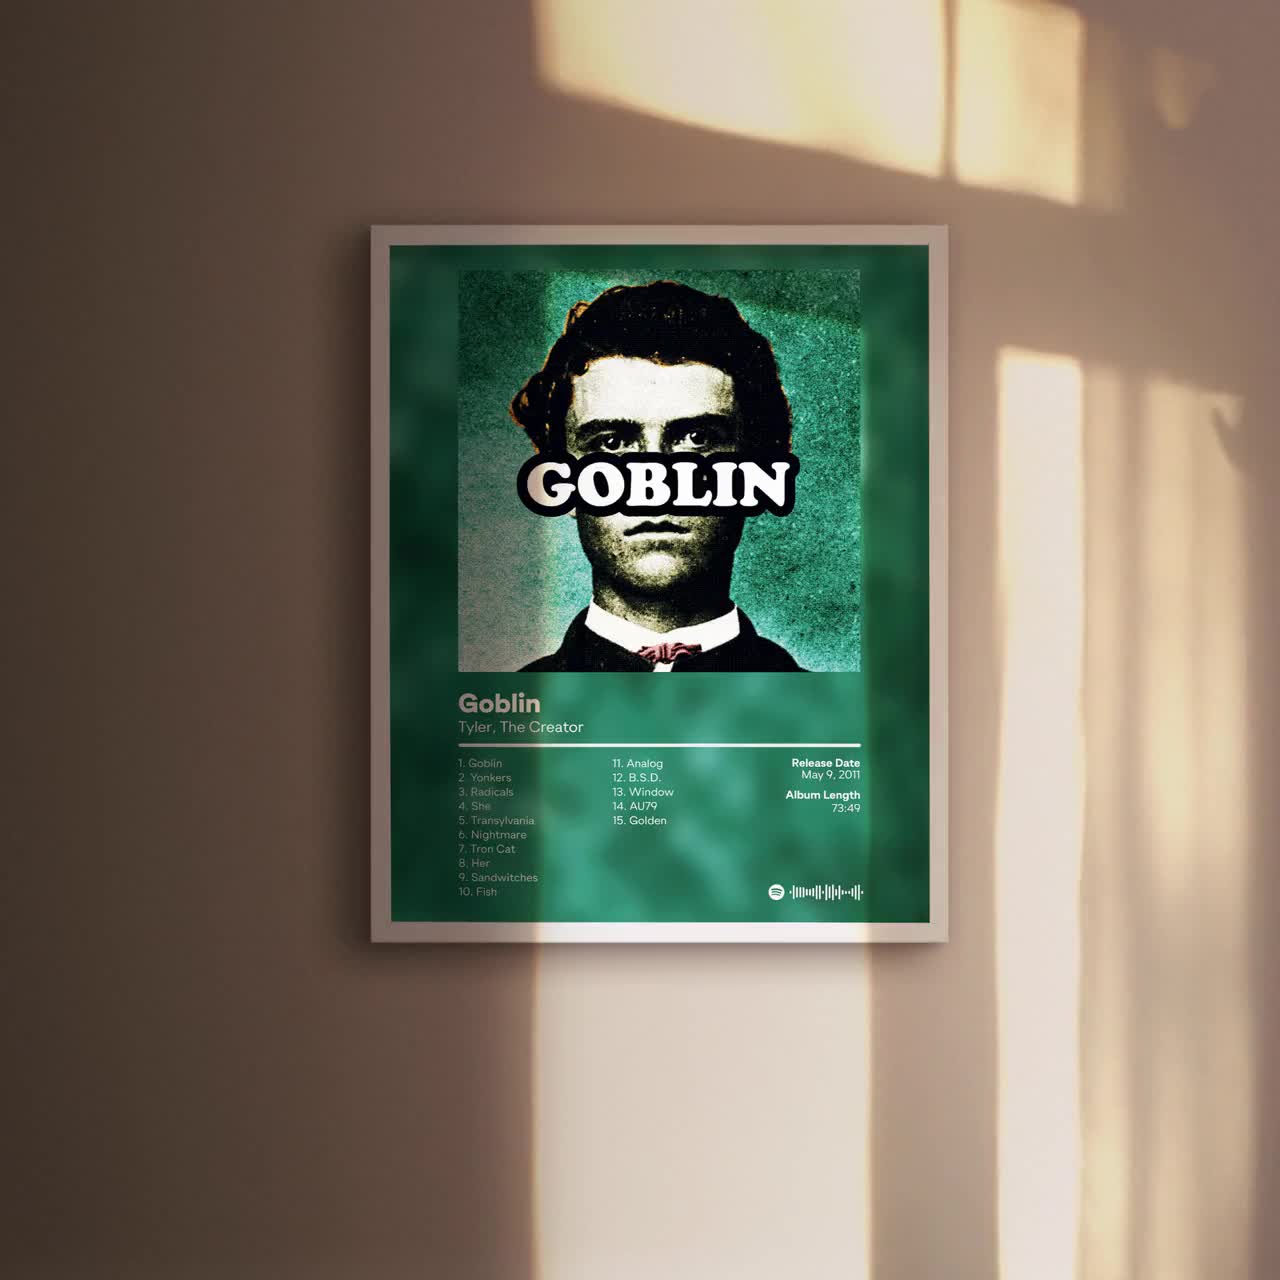 Tyler the Creator 'Goblin' Album Art Tracklist Poster – The Indie